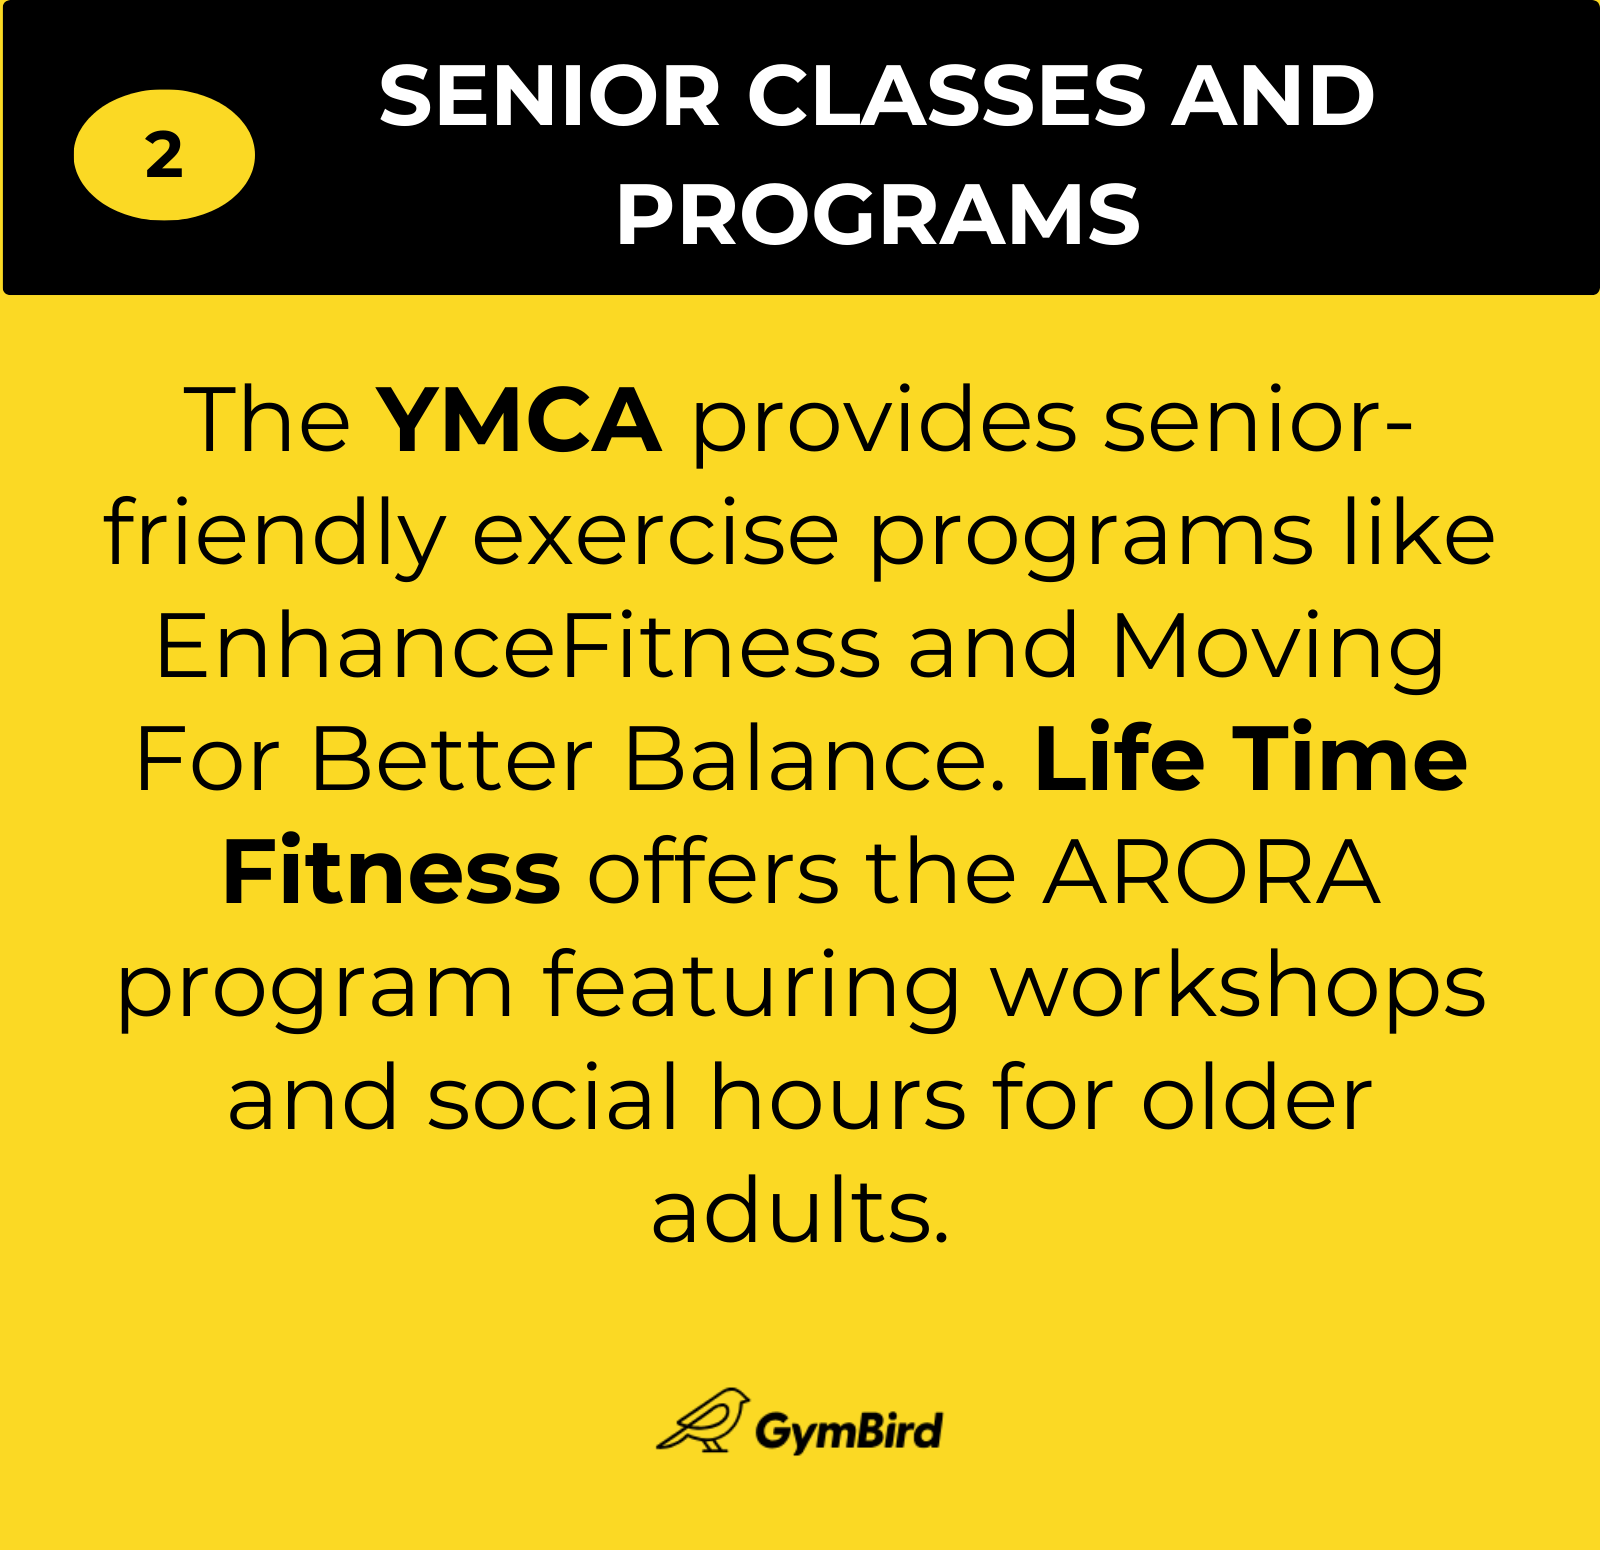 senior gym classses and programs